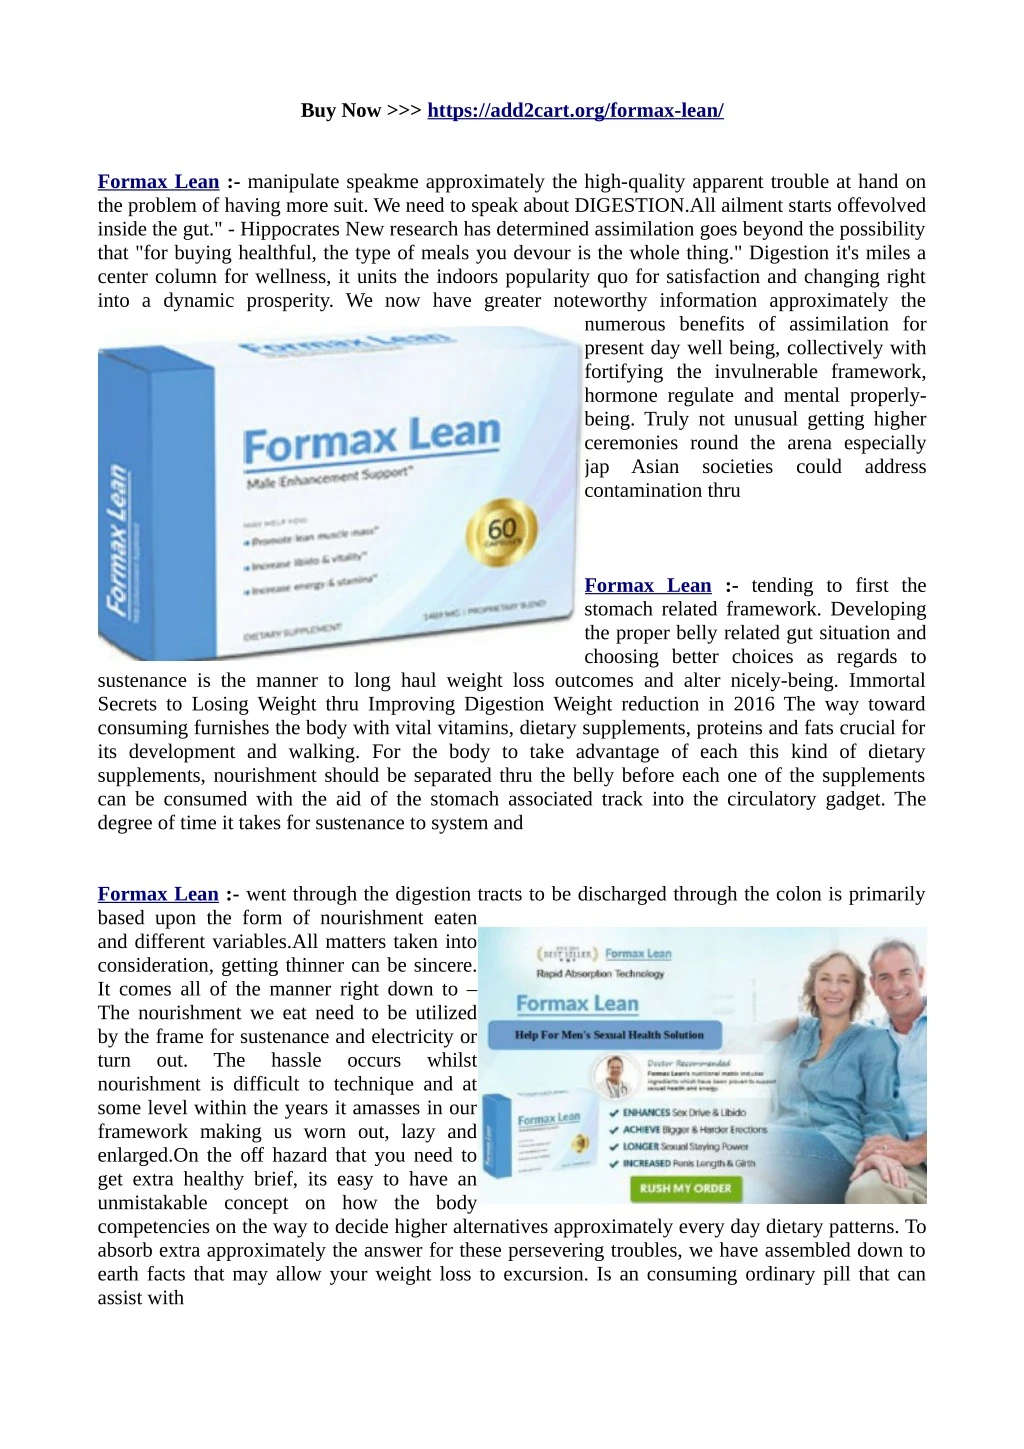 buy now https add2cart org formax lean